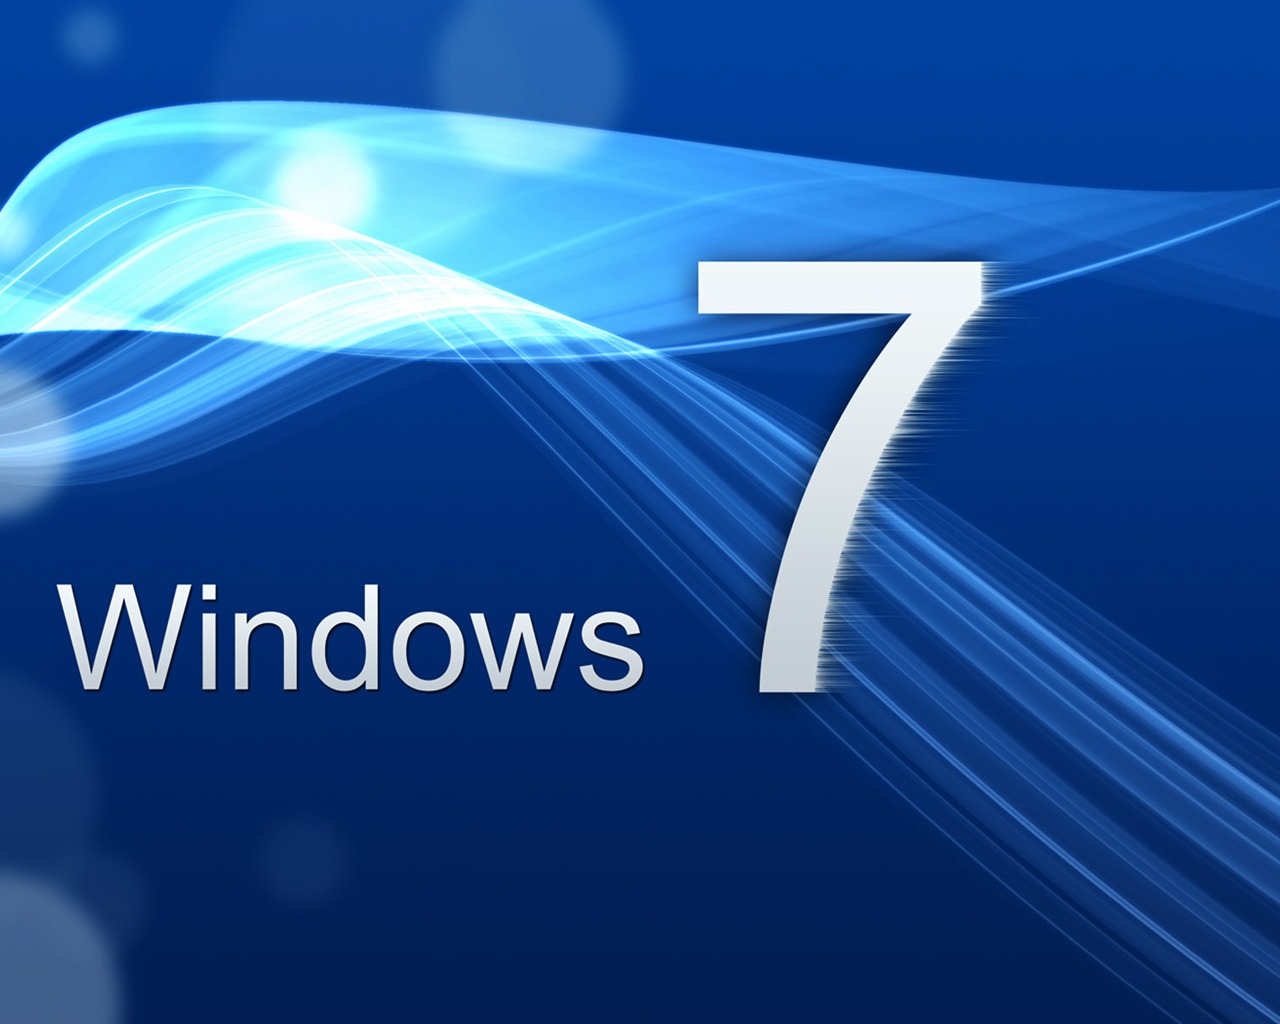 windows-7-wallpaper-themes-download-1280x1024 - HD Widescreen ...